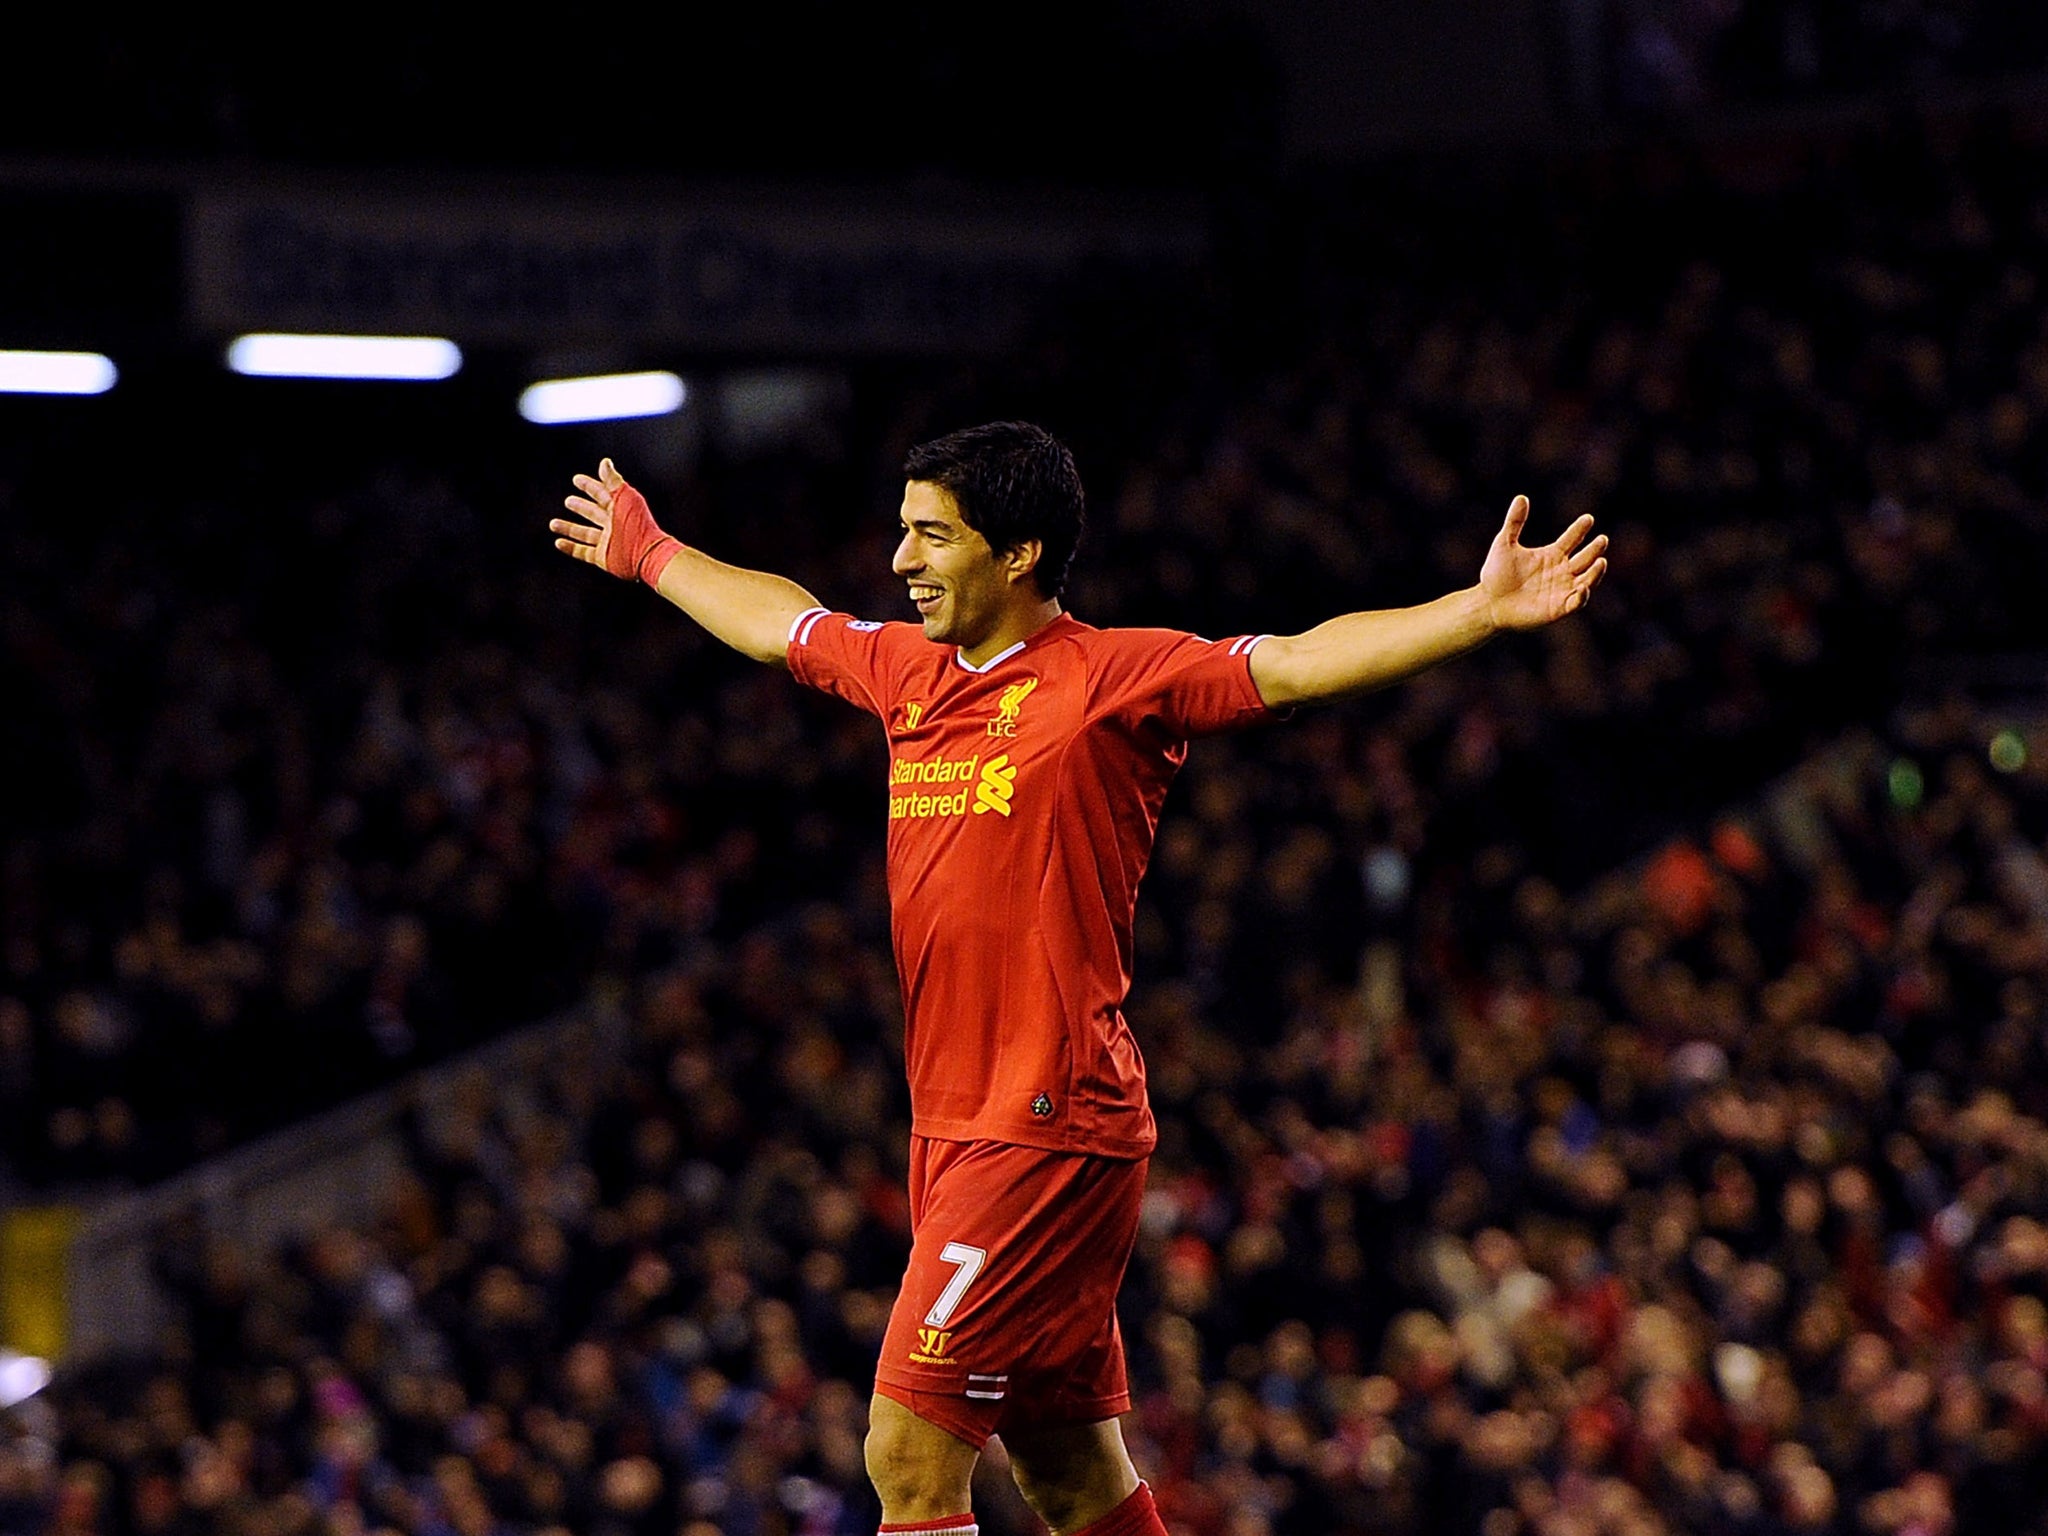 Luis Suarez celebrates after scoring against West Ham for Liverpool